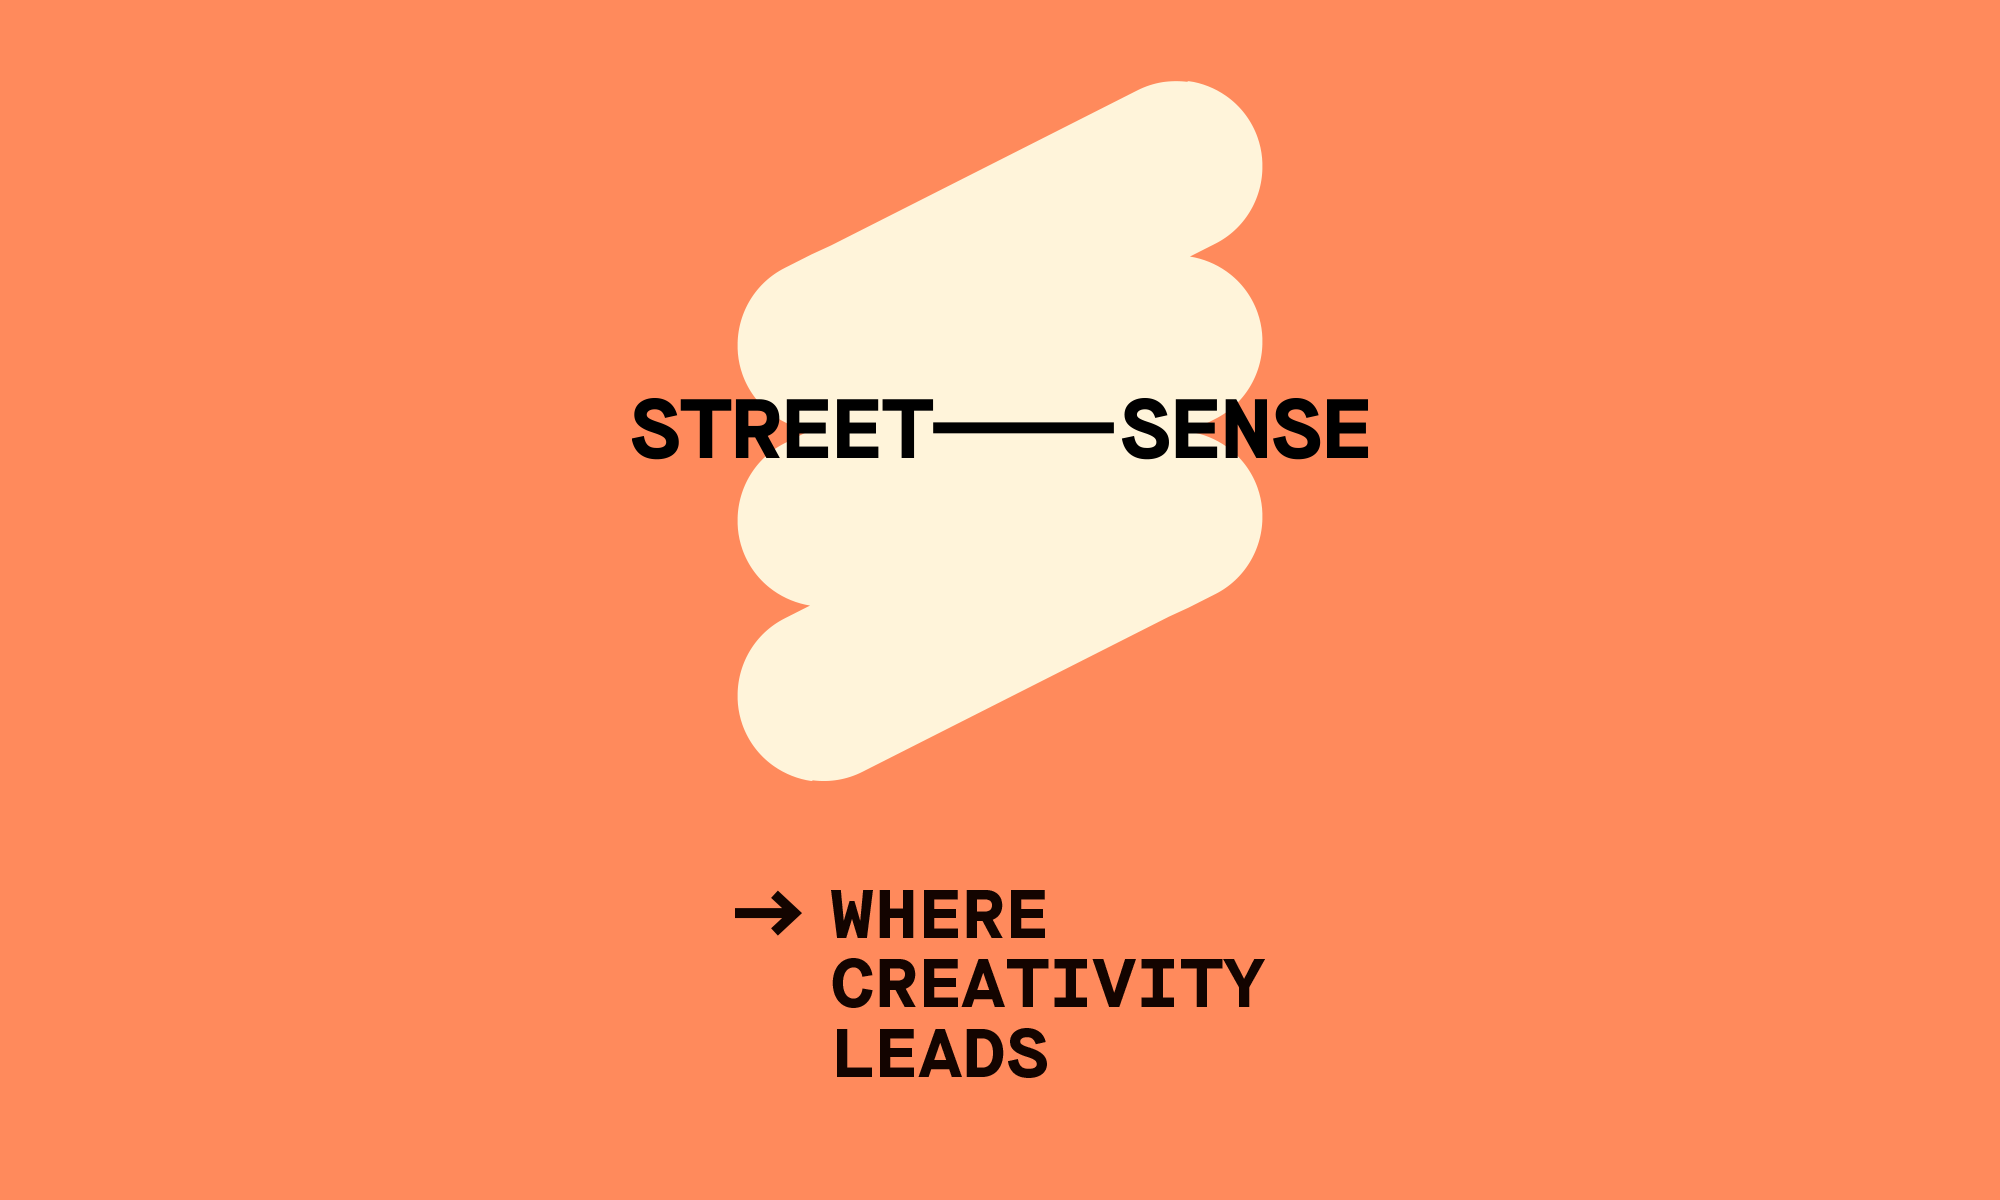 Streetsense brand refresh logo - "where creativity leads" below it.